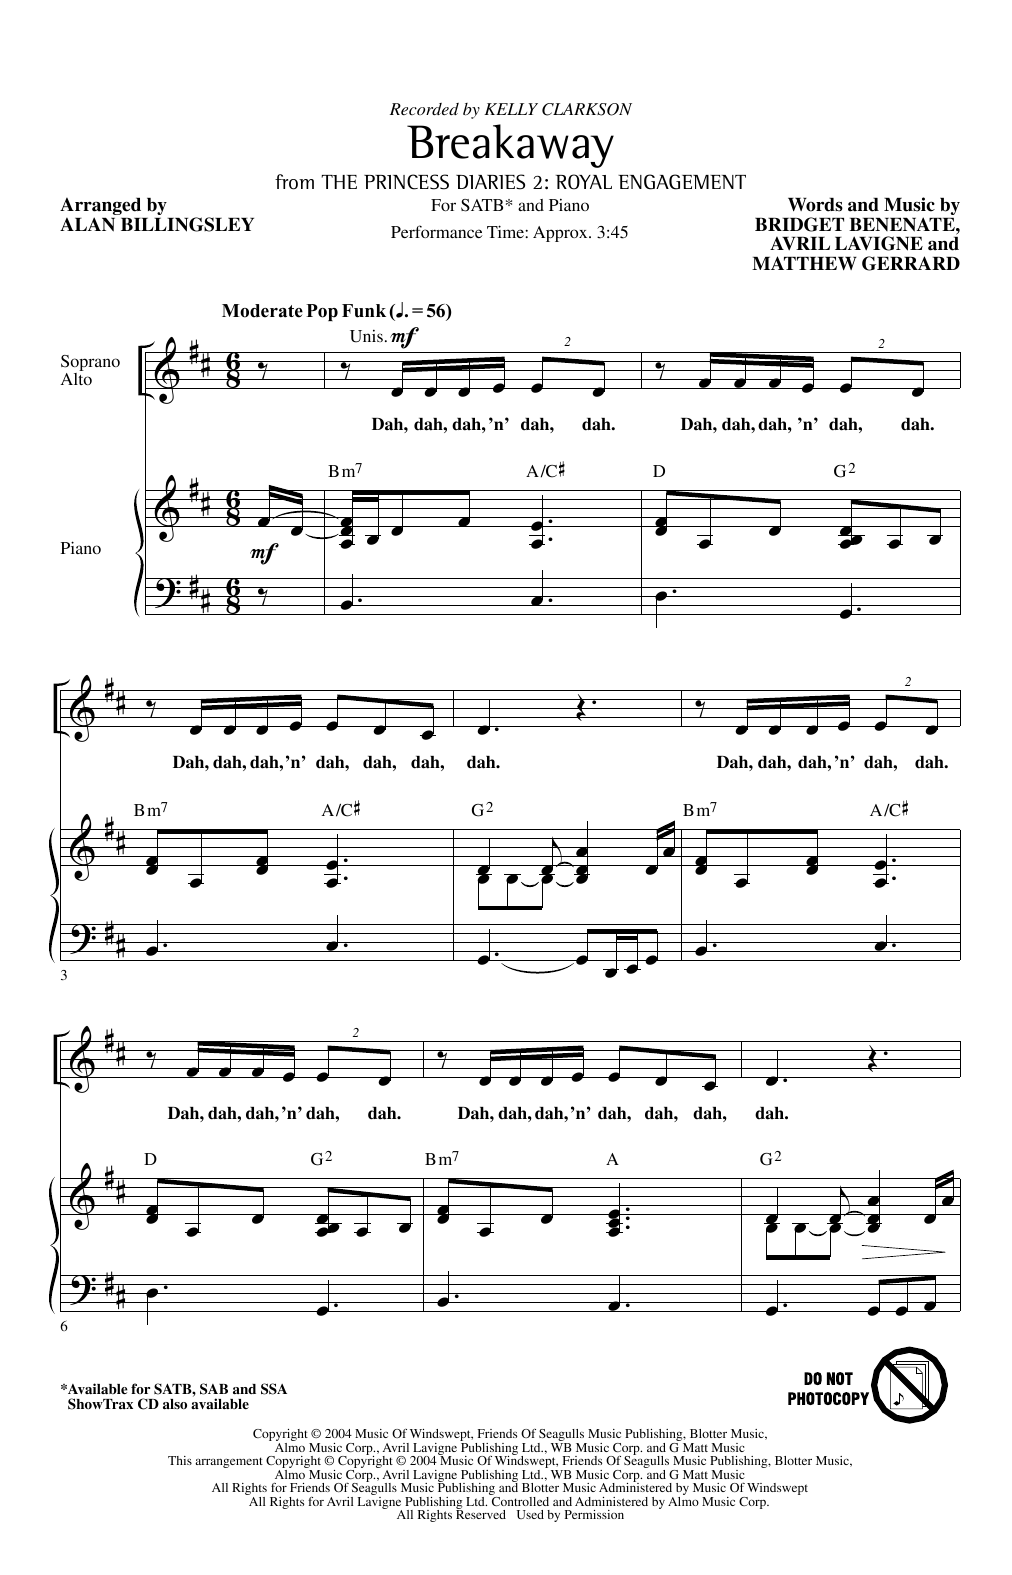 Kelly Clarkson Breakaway (arr. Alan Billingsley) Sheet Music Notes & Chords for SATB Choir - Download or Print PDF